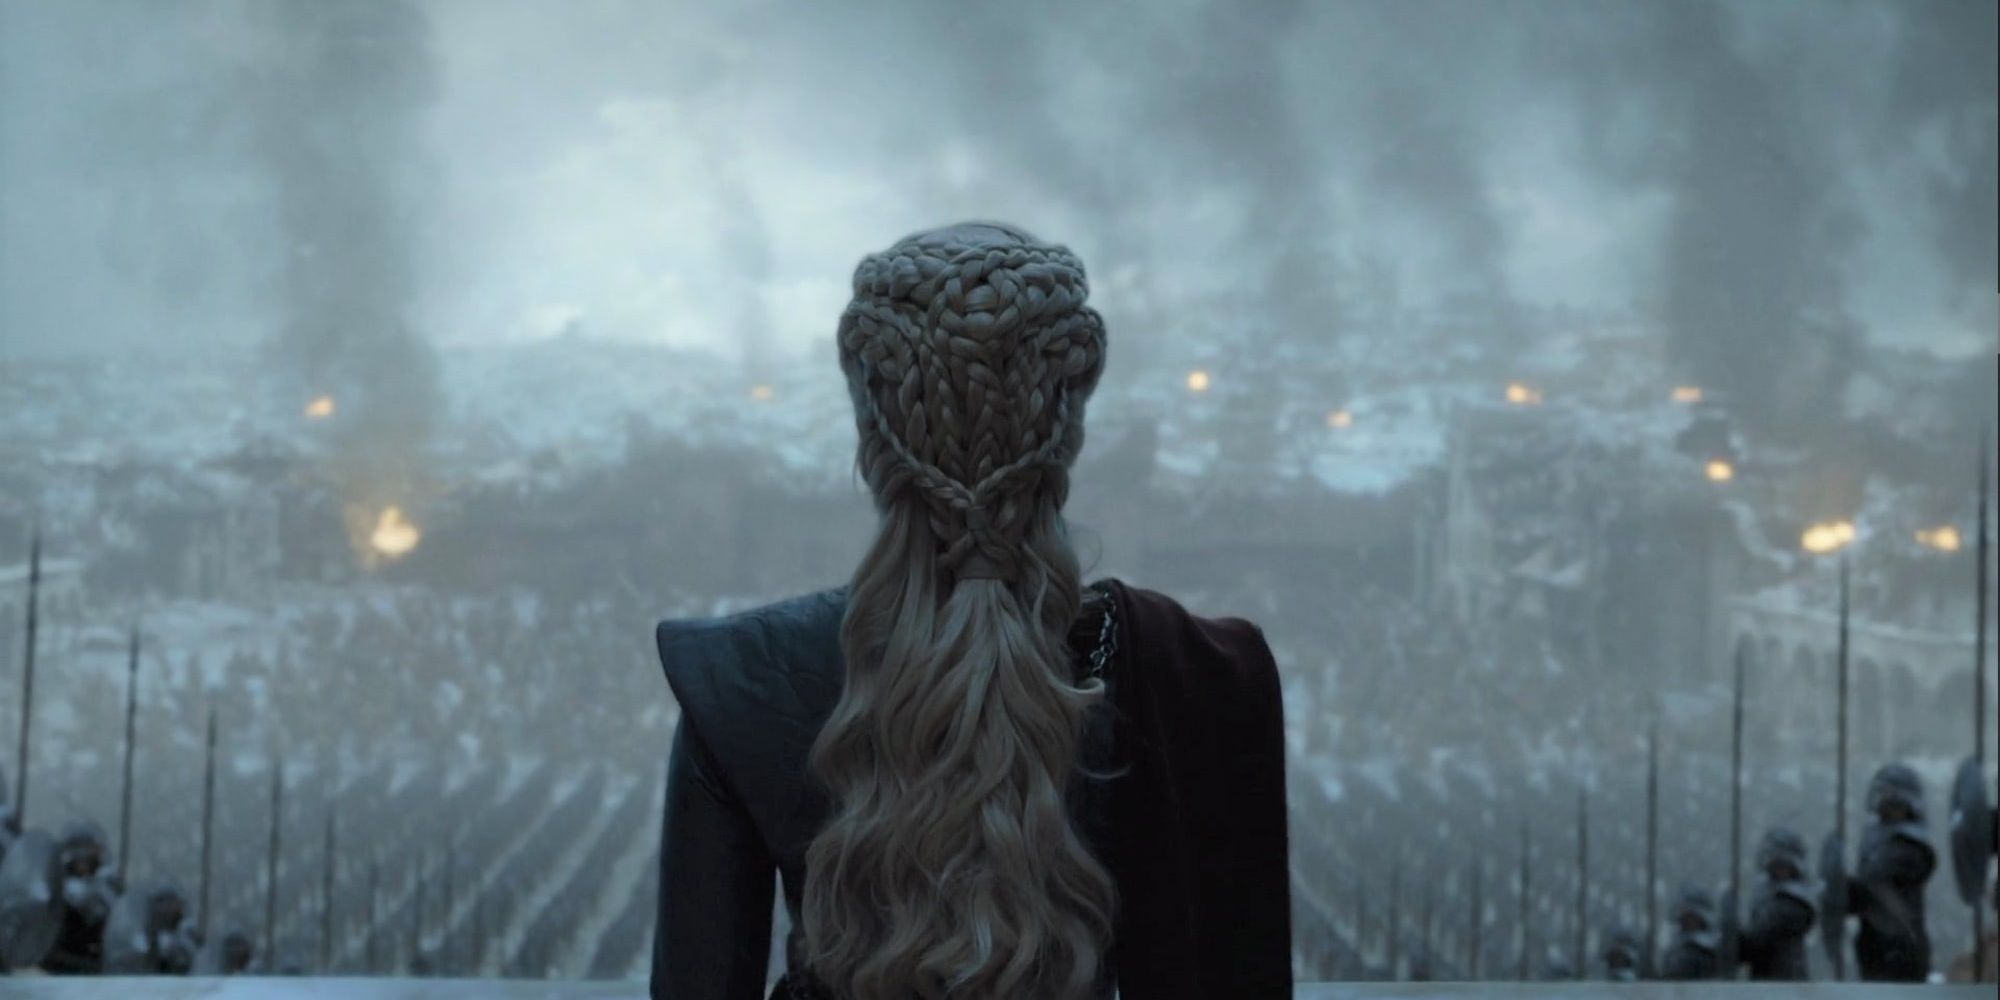 Daenerys Targaryen addresses her armies in Game of Thrones. 